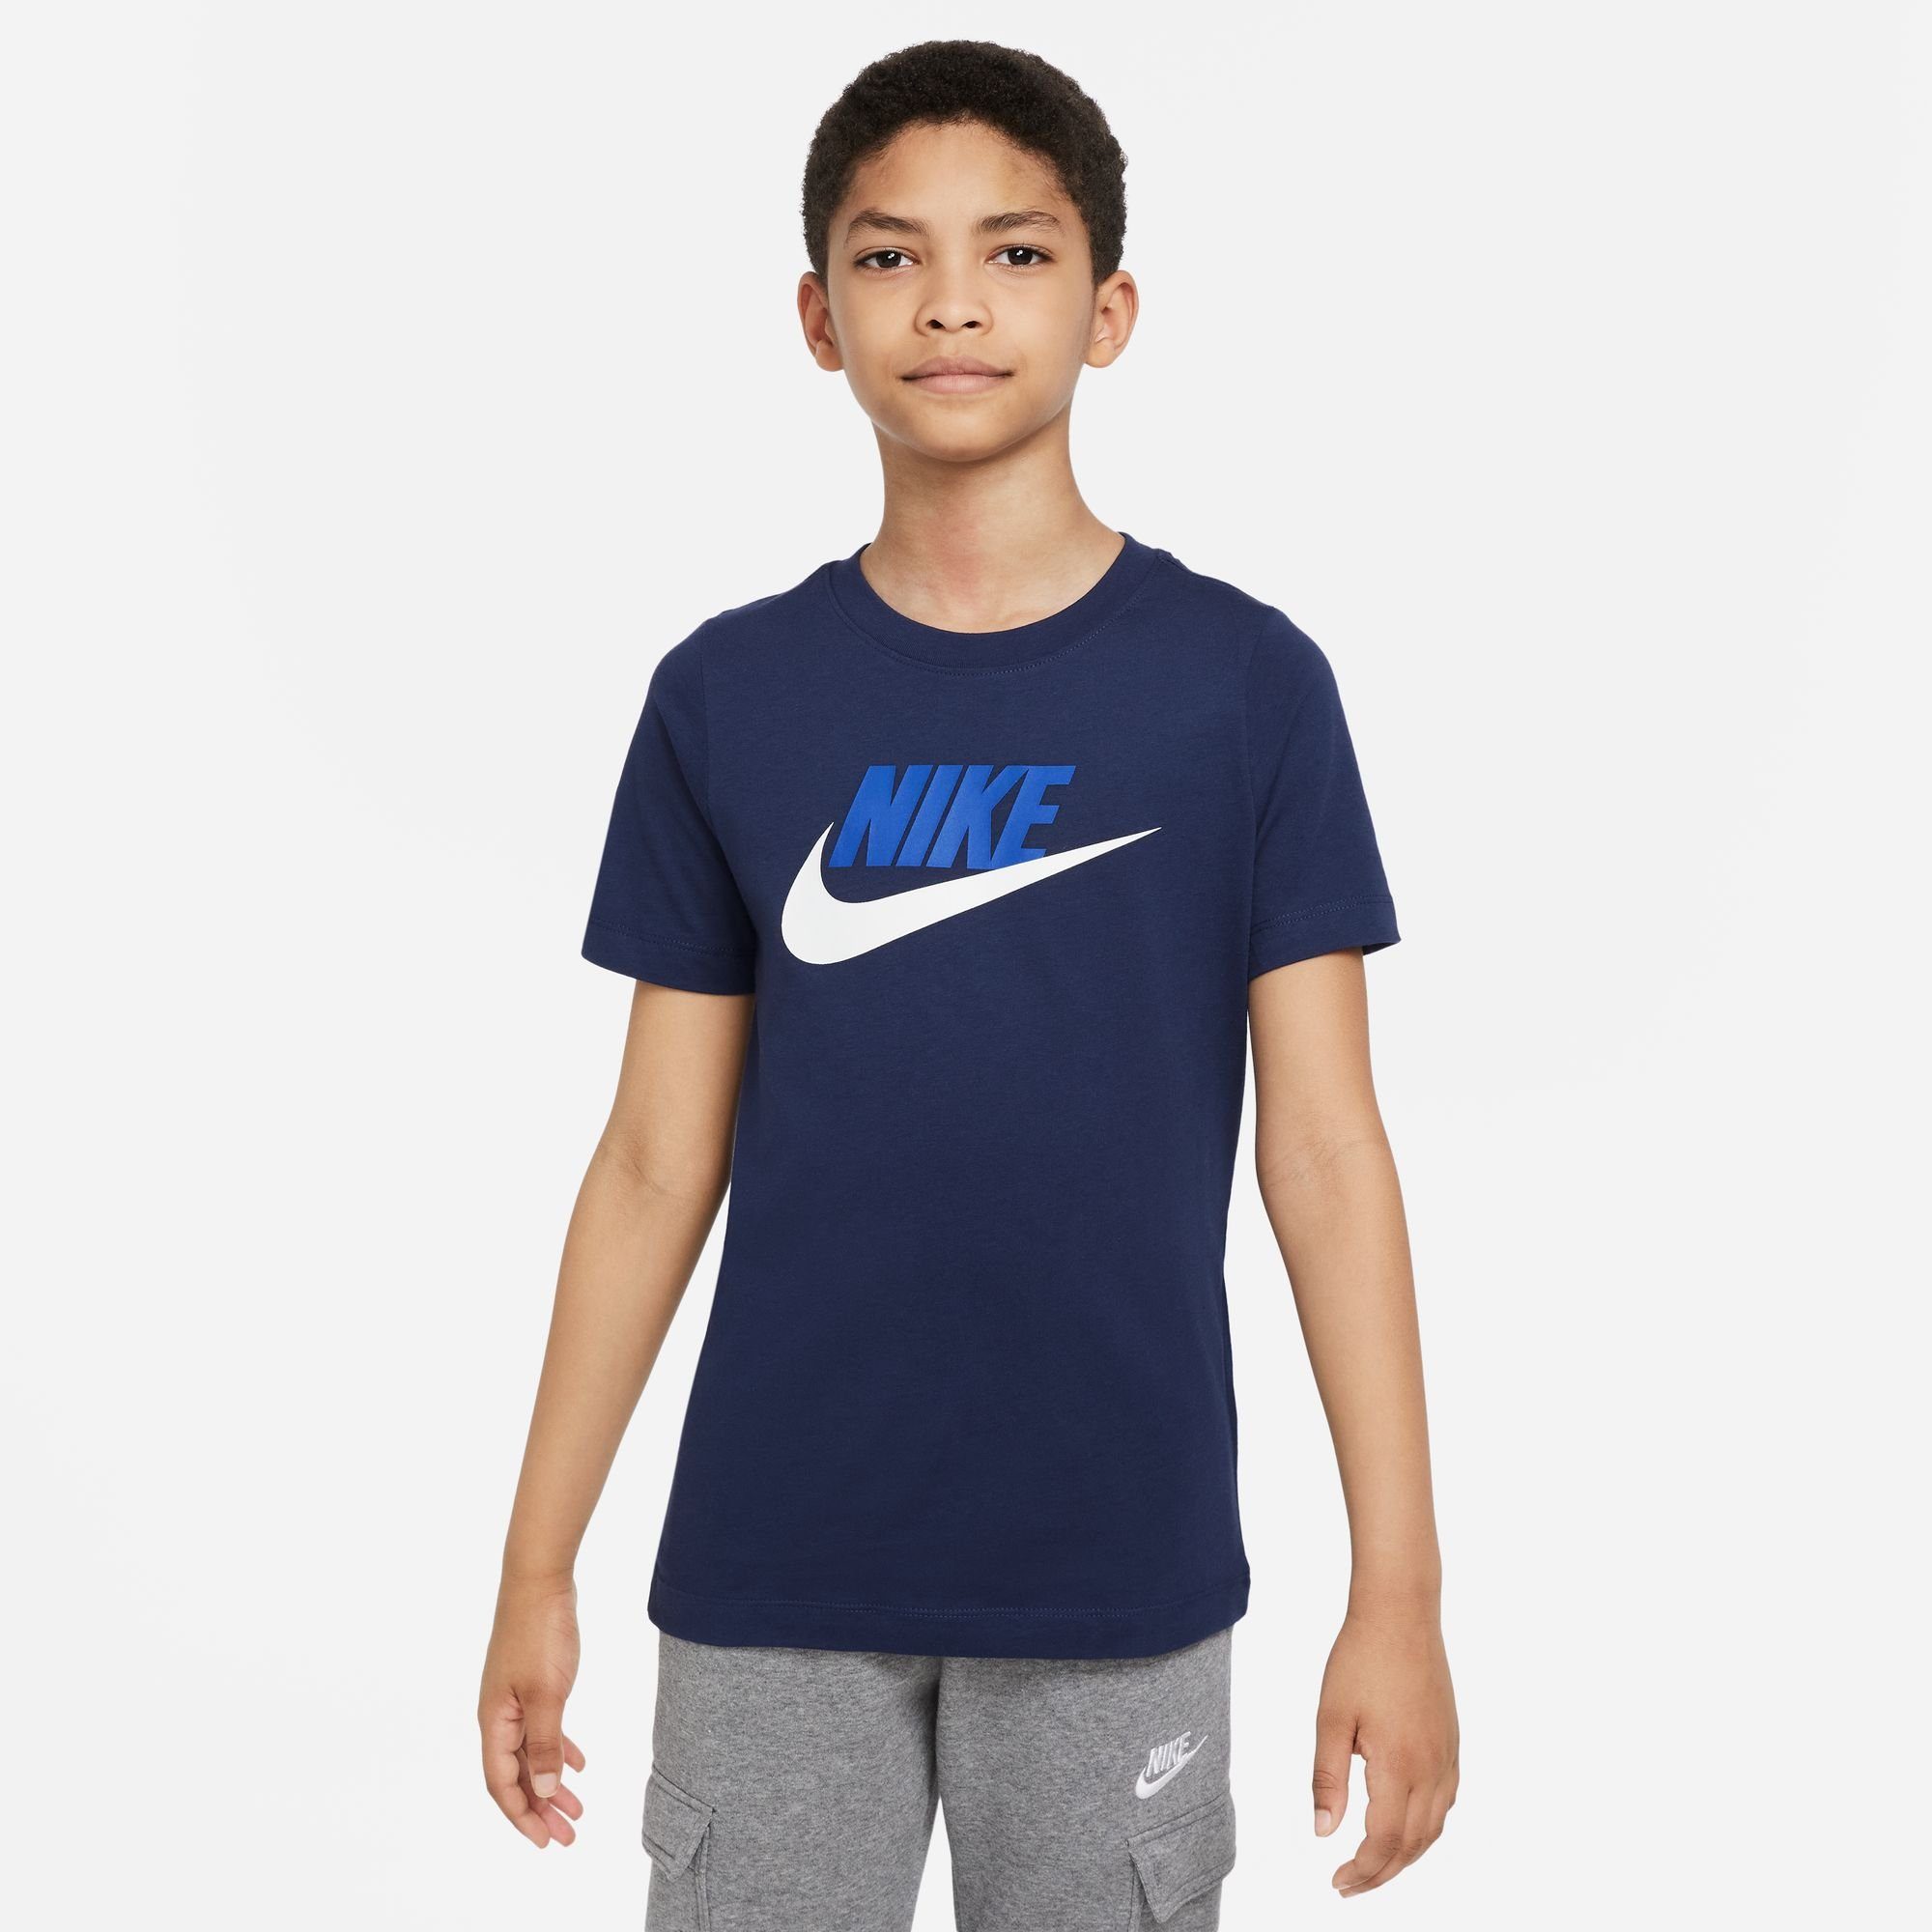 Verkaufsförderung Nike Sportswear T-Shirt MIDNIGHT NAVY/WHITE COTTON T-SHIRT KIDS' BIG